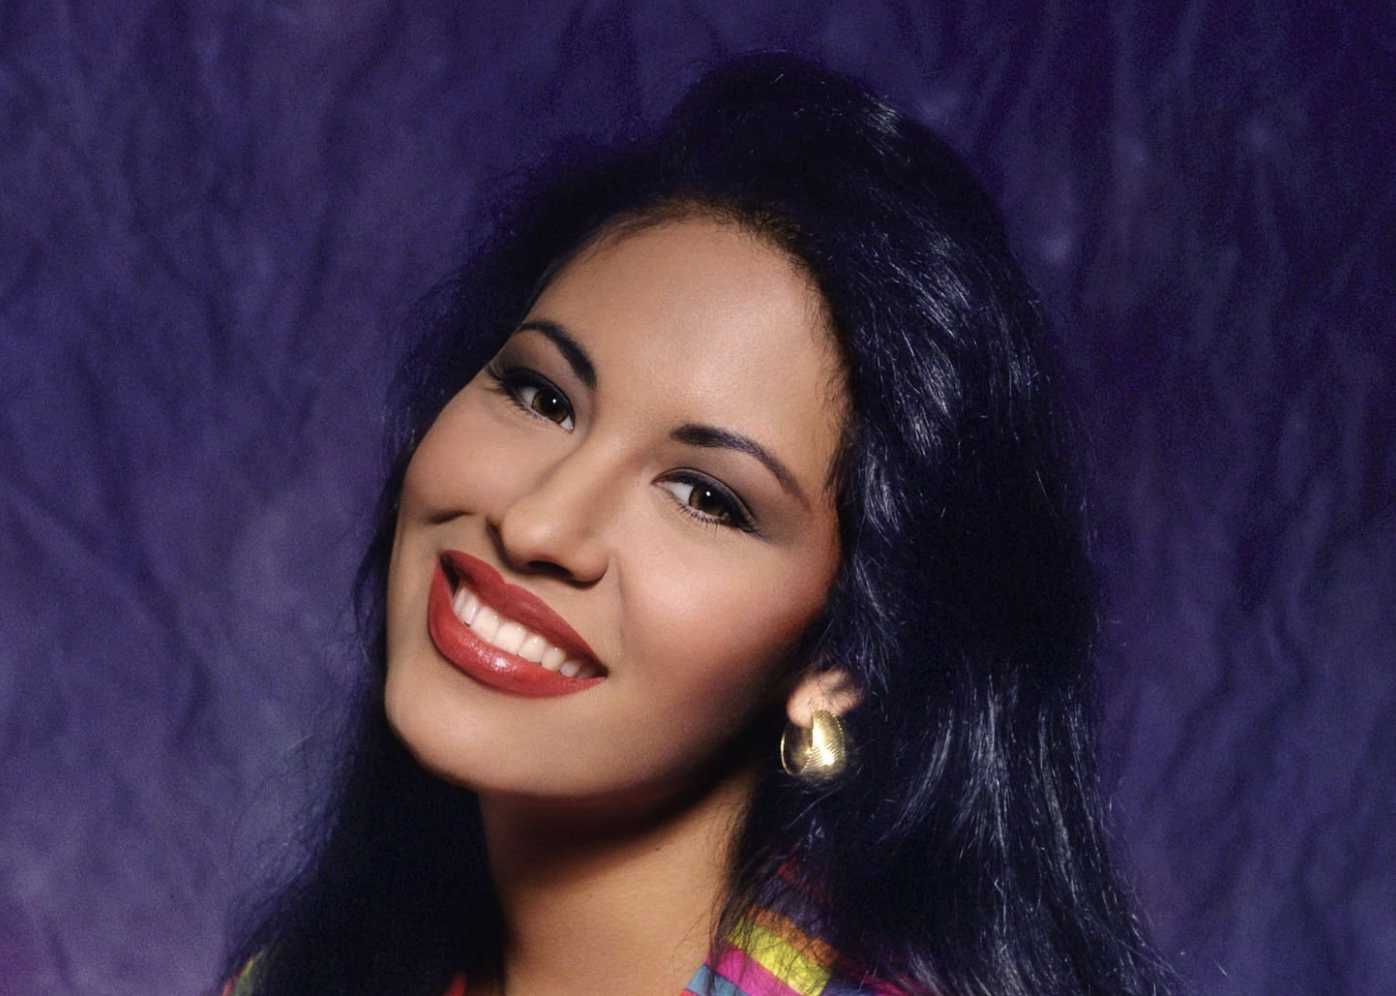 Singer Selena Quintanilla-Pérez poses for a portrait in June 1994 in Los Angeles